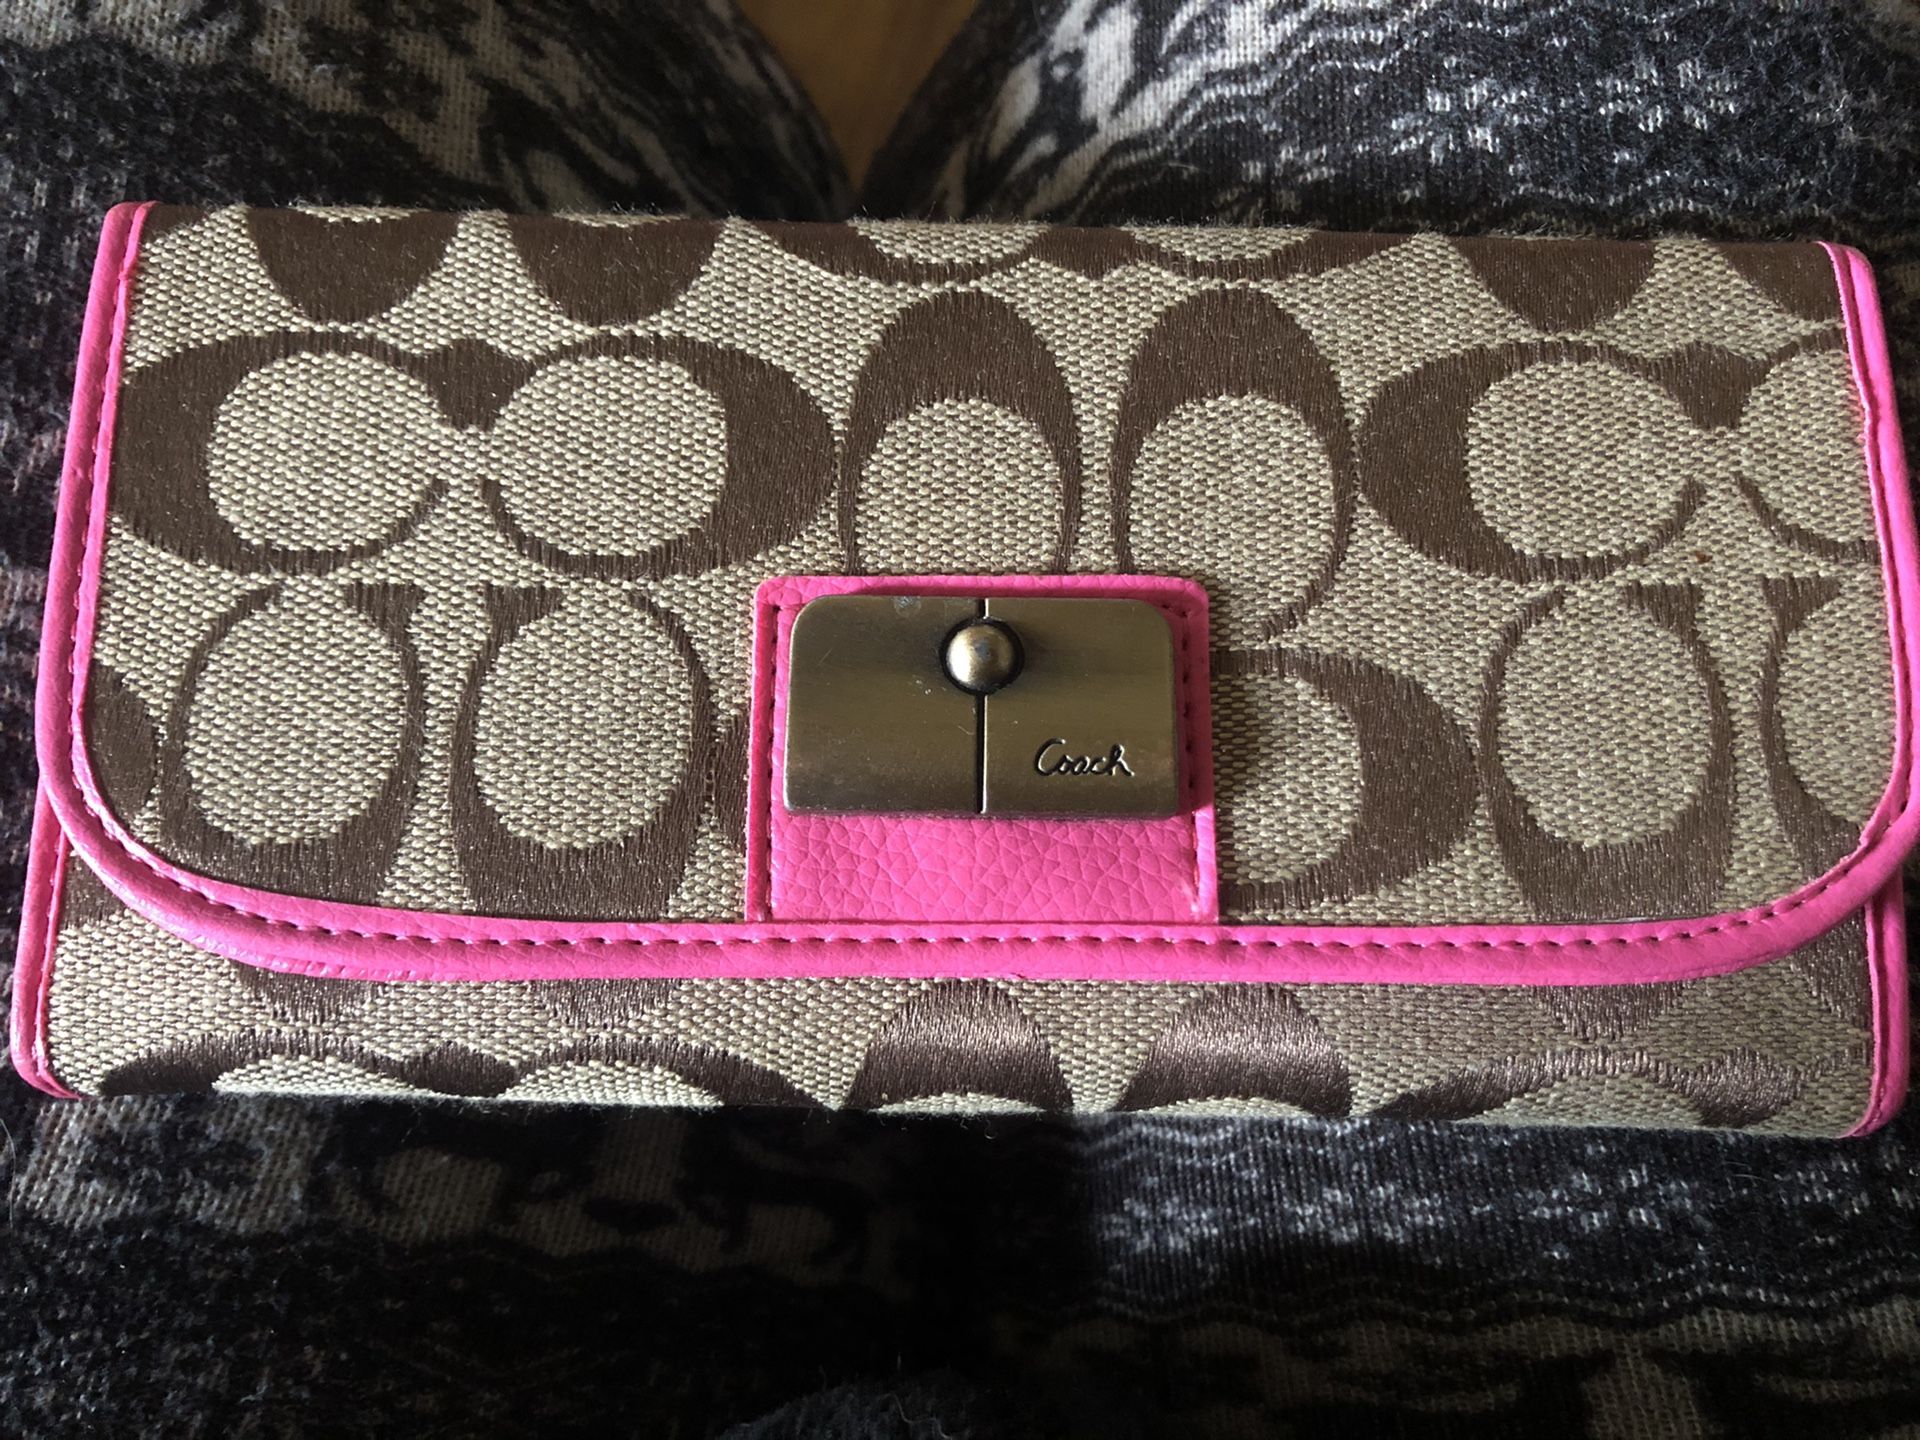 Pink Coach wallet